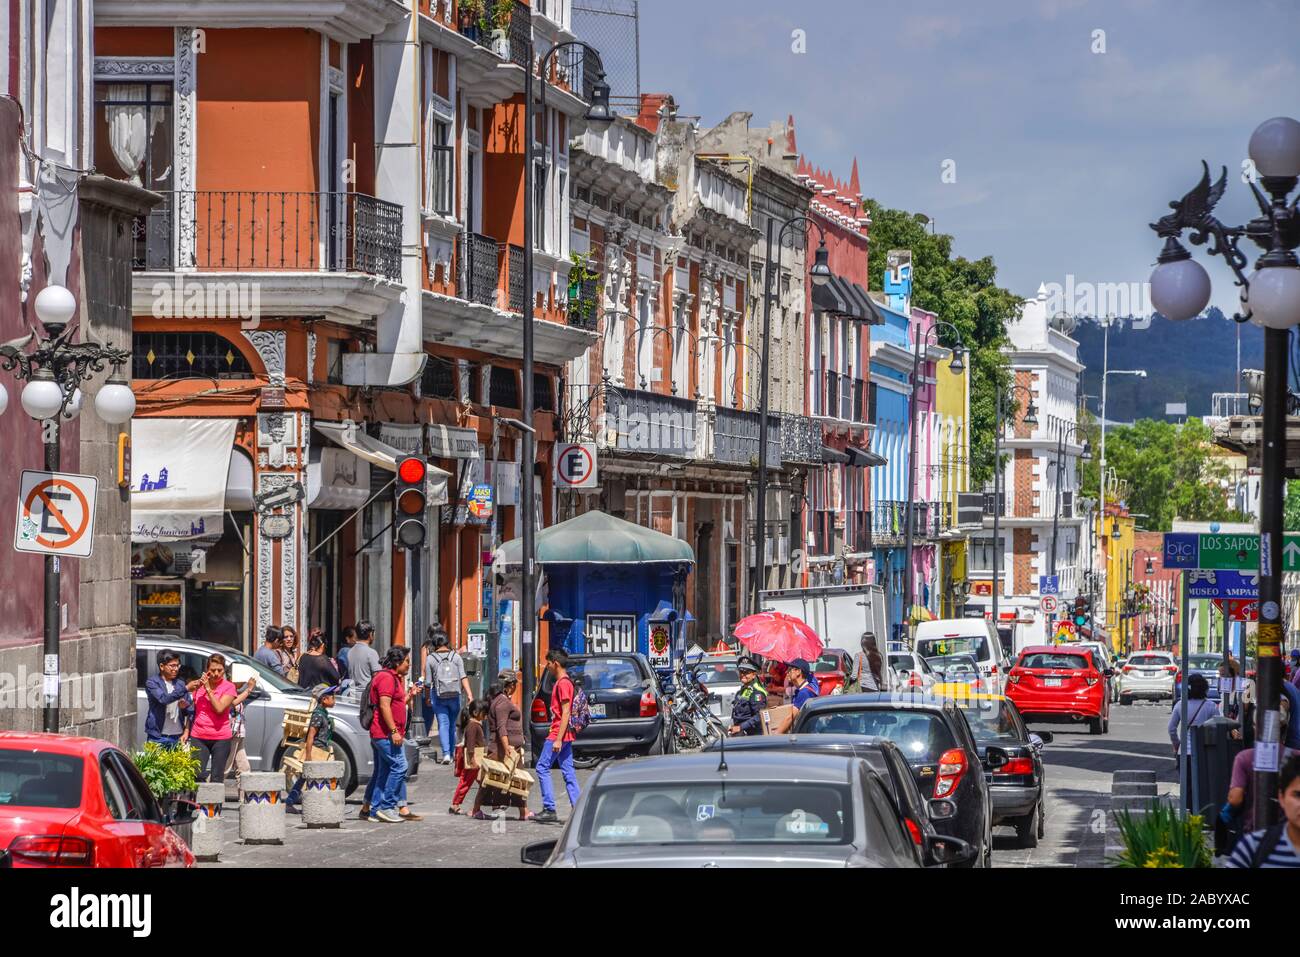 Straßenszene, Altbauten, Altstadt, Puebla, Mexiko Stock Photo